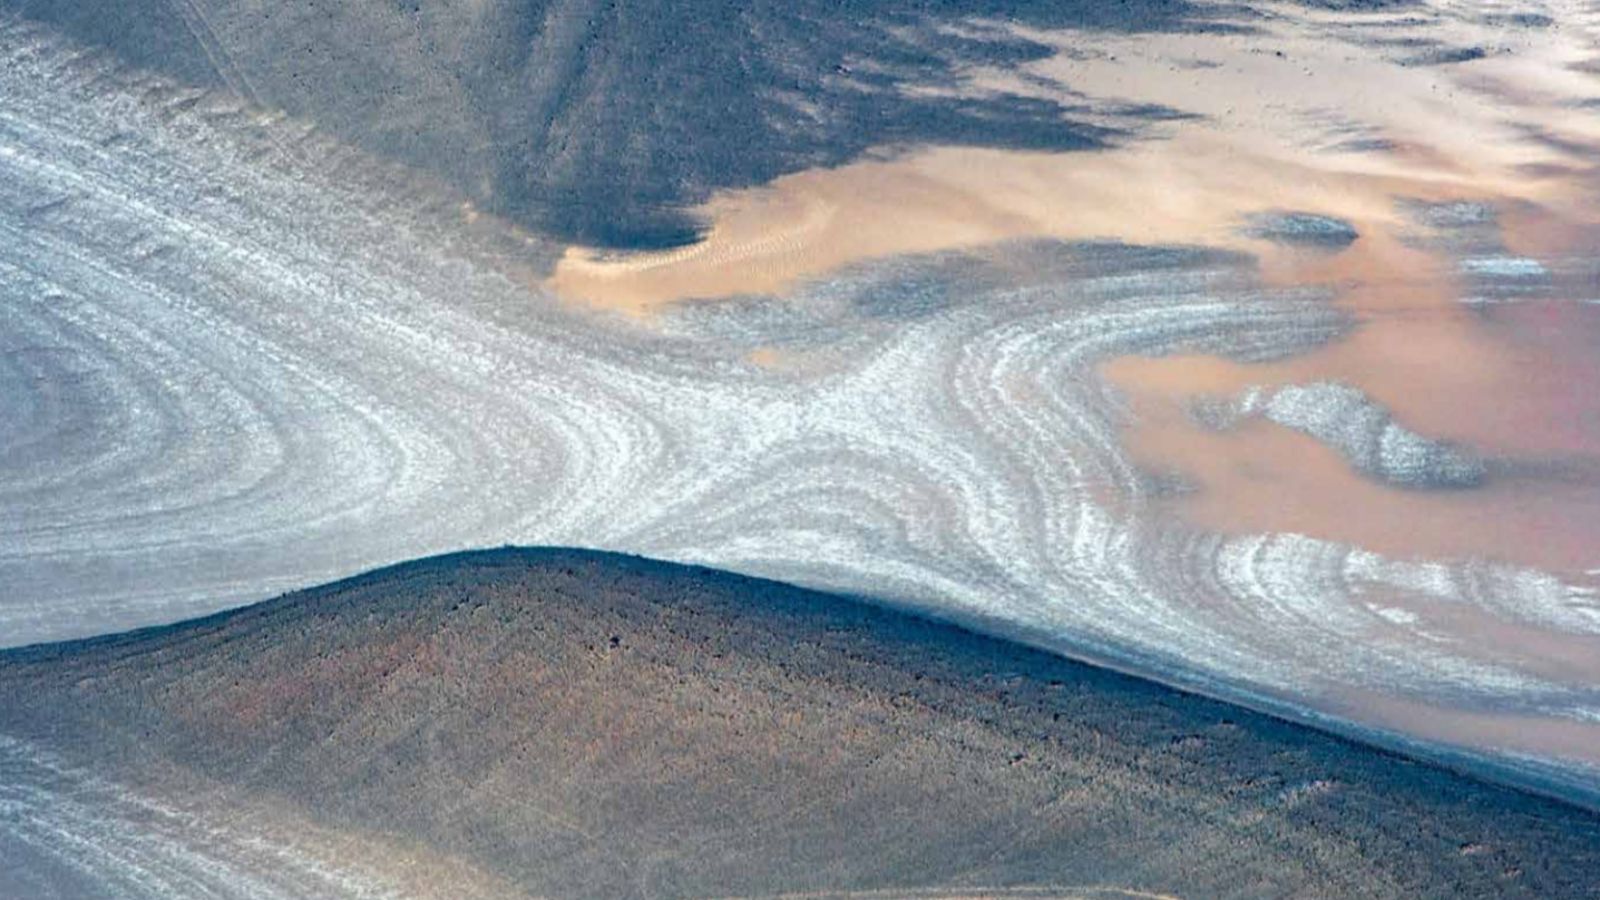 Desert landscape on the way to Tolar Grande by award winning photographer Ignacio Palacios